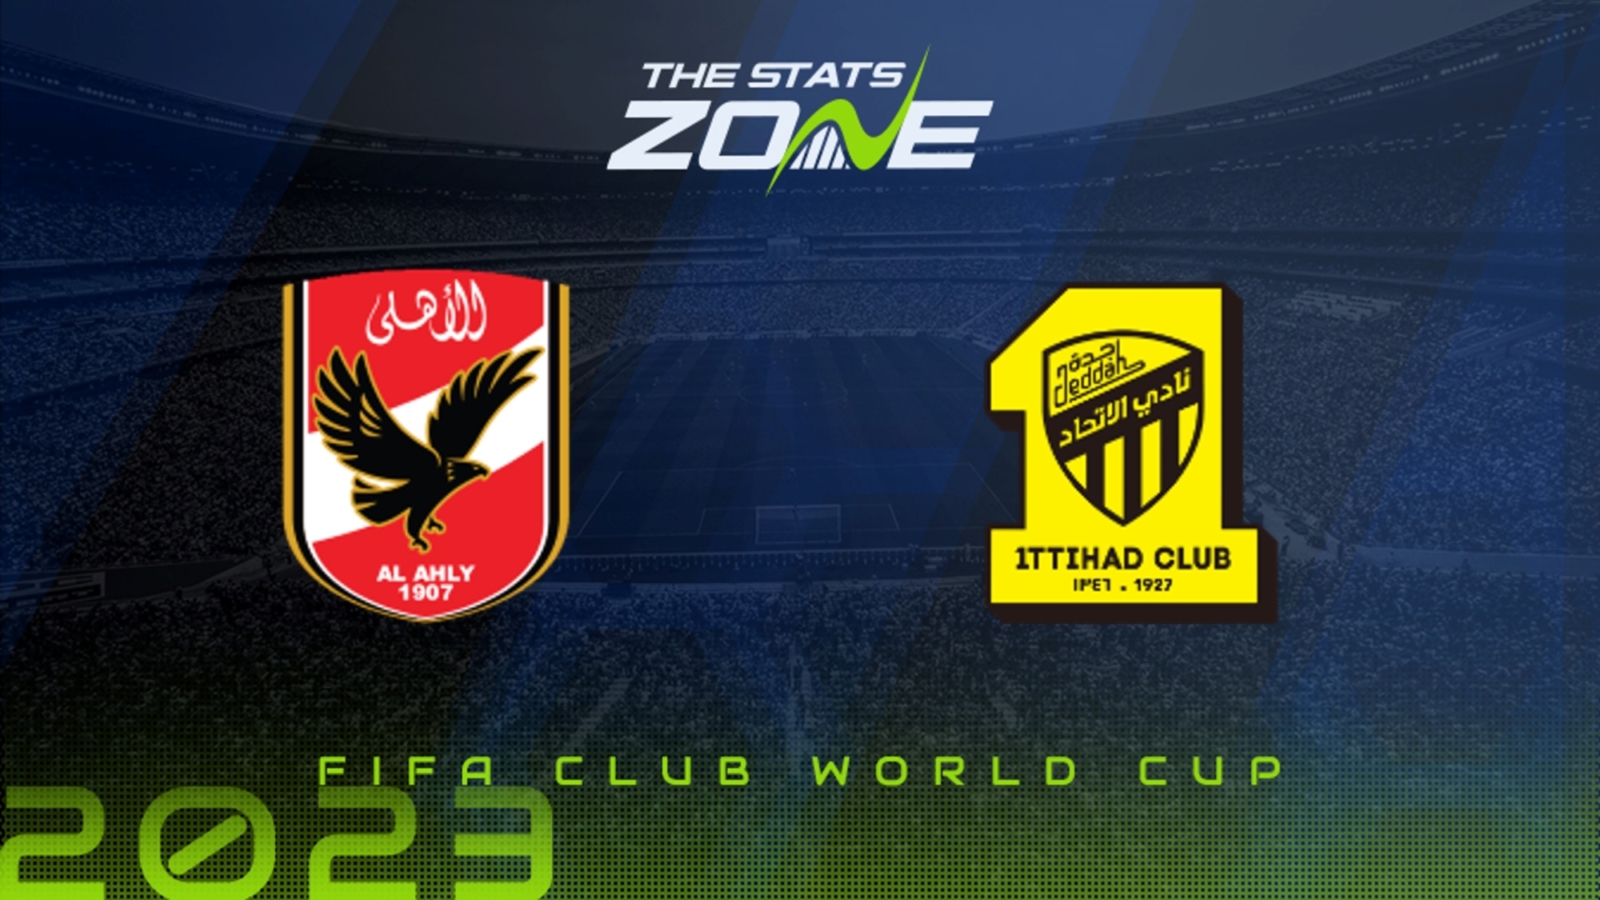 Match Preview: Al Ahly FC v Al Ittihad, Second round